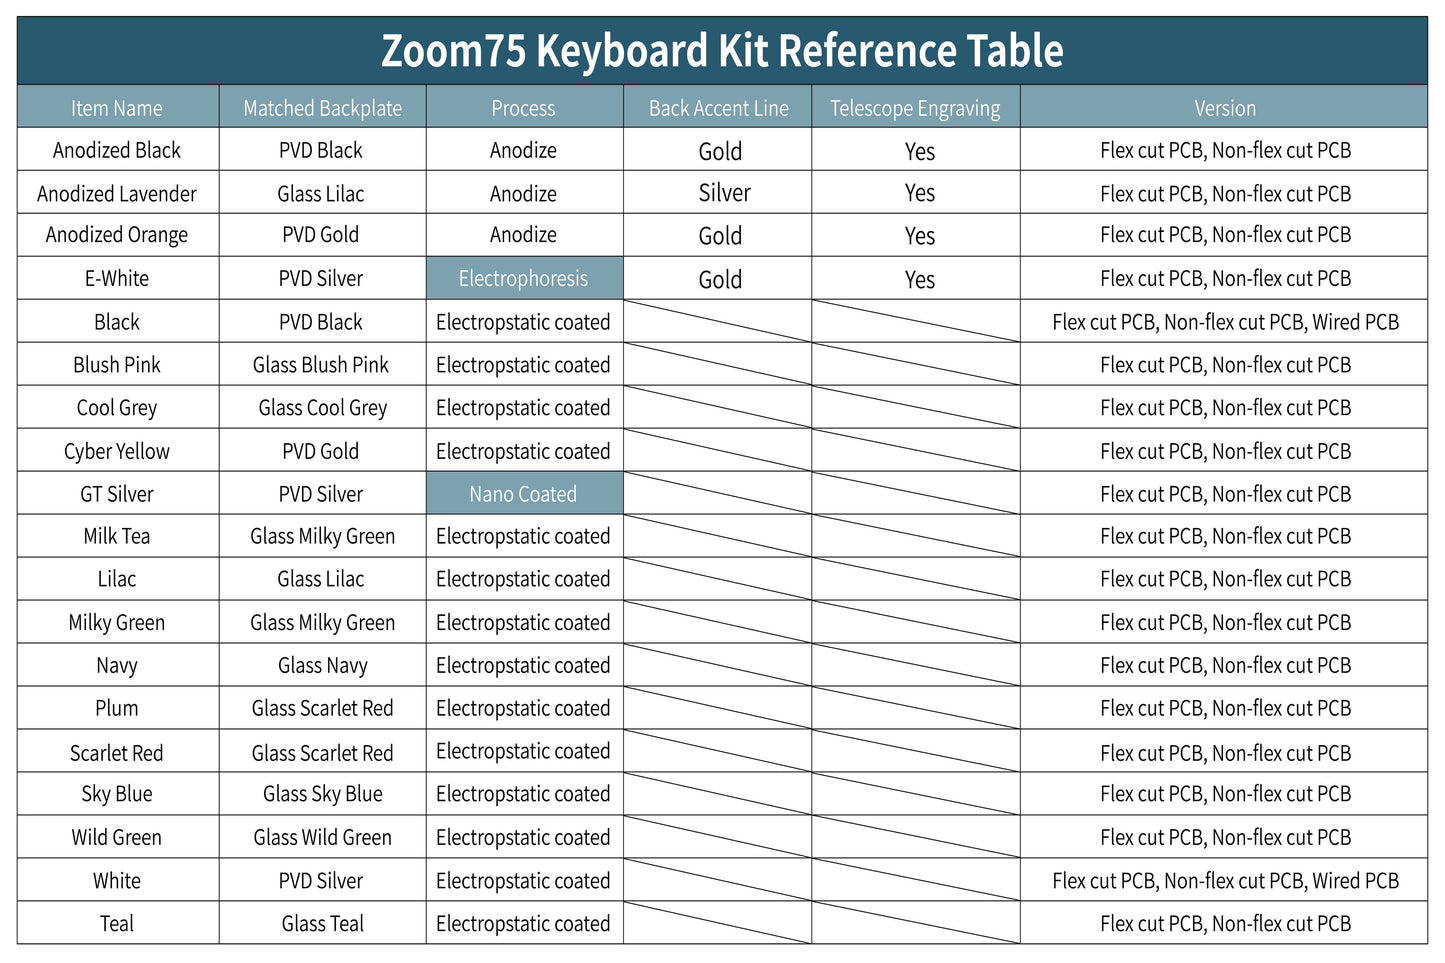 [Group-Buy] Meletrix Zoom75 Essential Edition (EE) - Barebones Keyboard Kit - Milk Tea [Air Shipping]